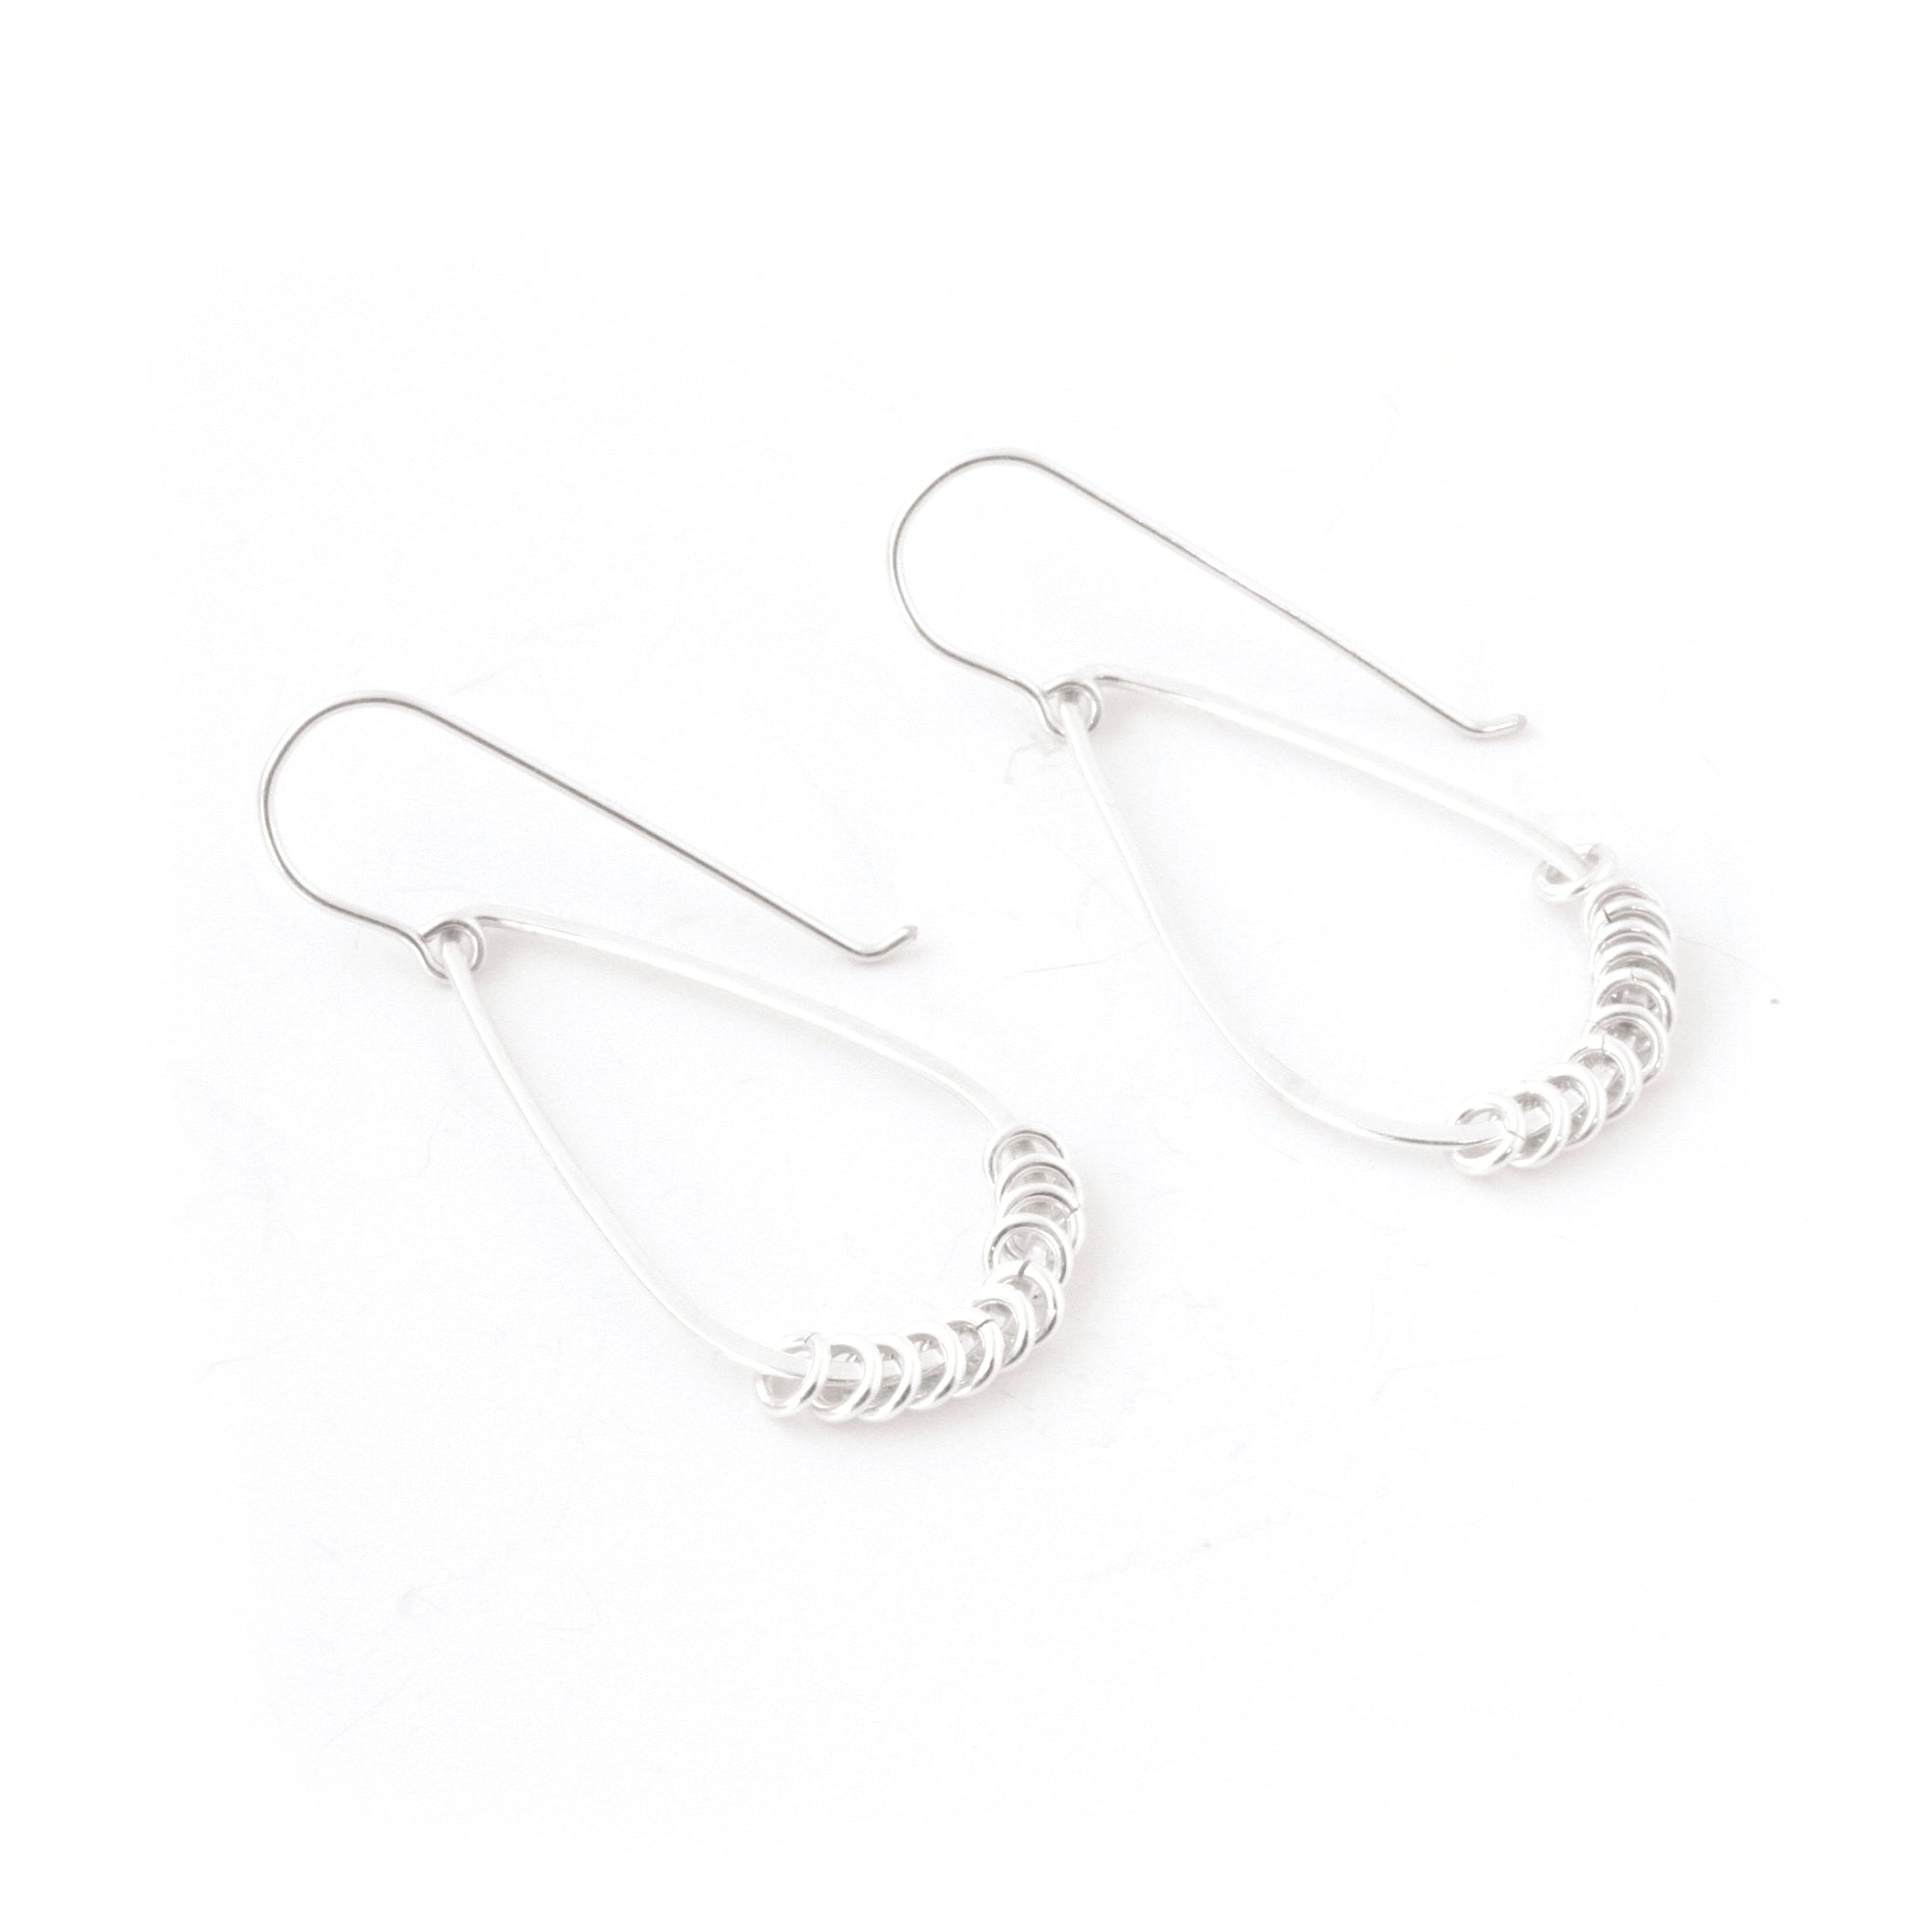 Suspended Earrings (Sterling Silver)